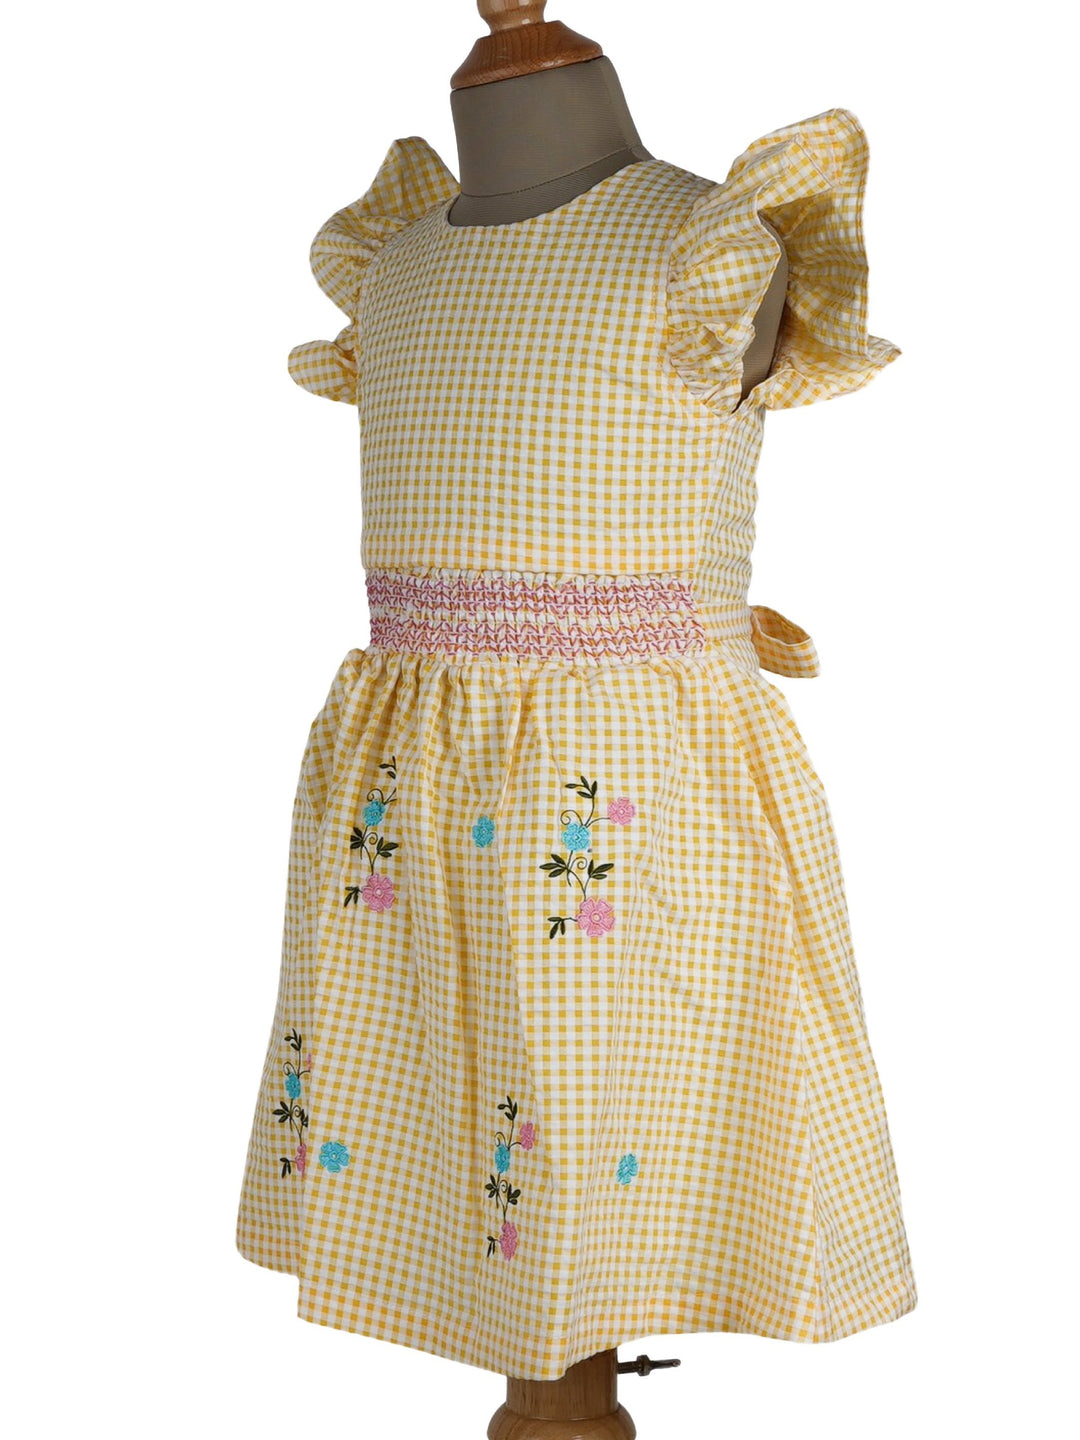 The Nesavu Frocks & Dresses Pretty Yellow Cotton Dress With Lace Embellishments With Flutter Sleeve psr silks Nesavu